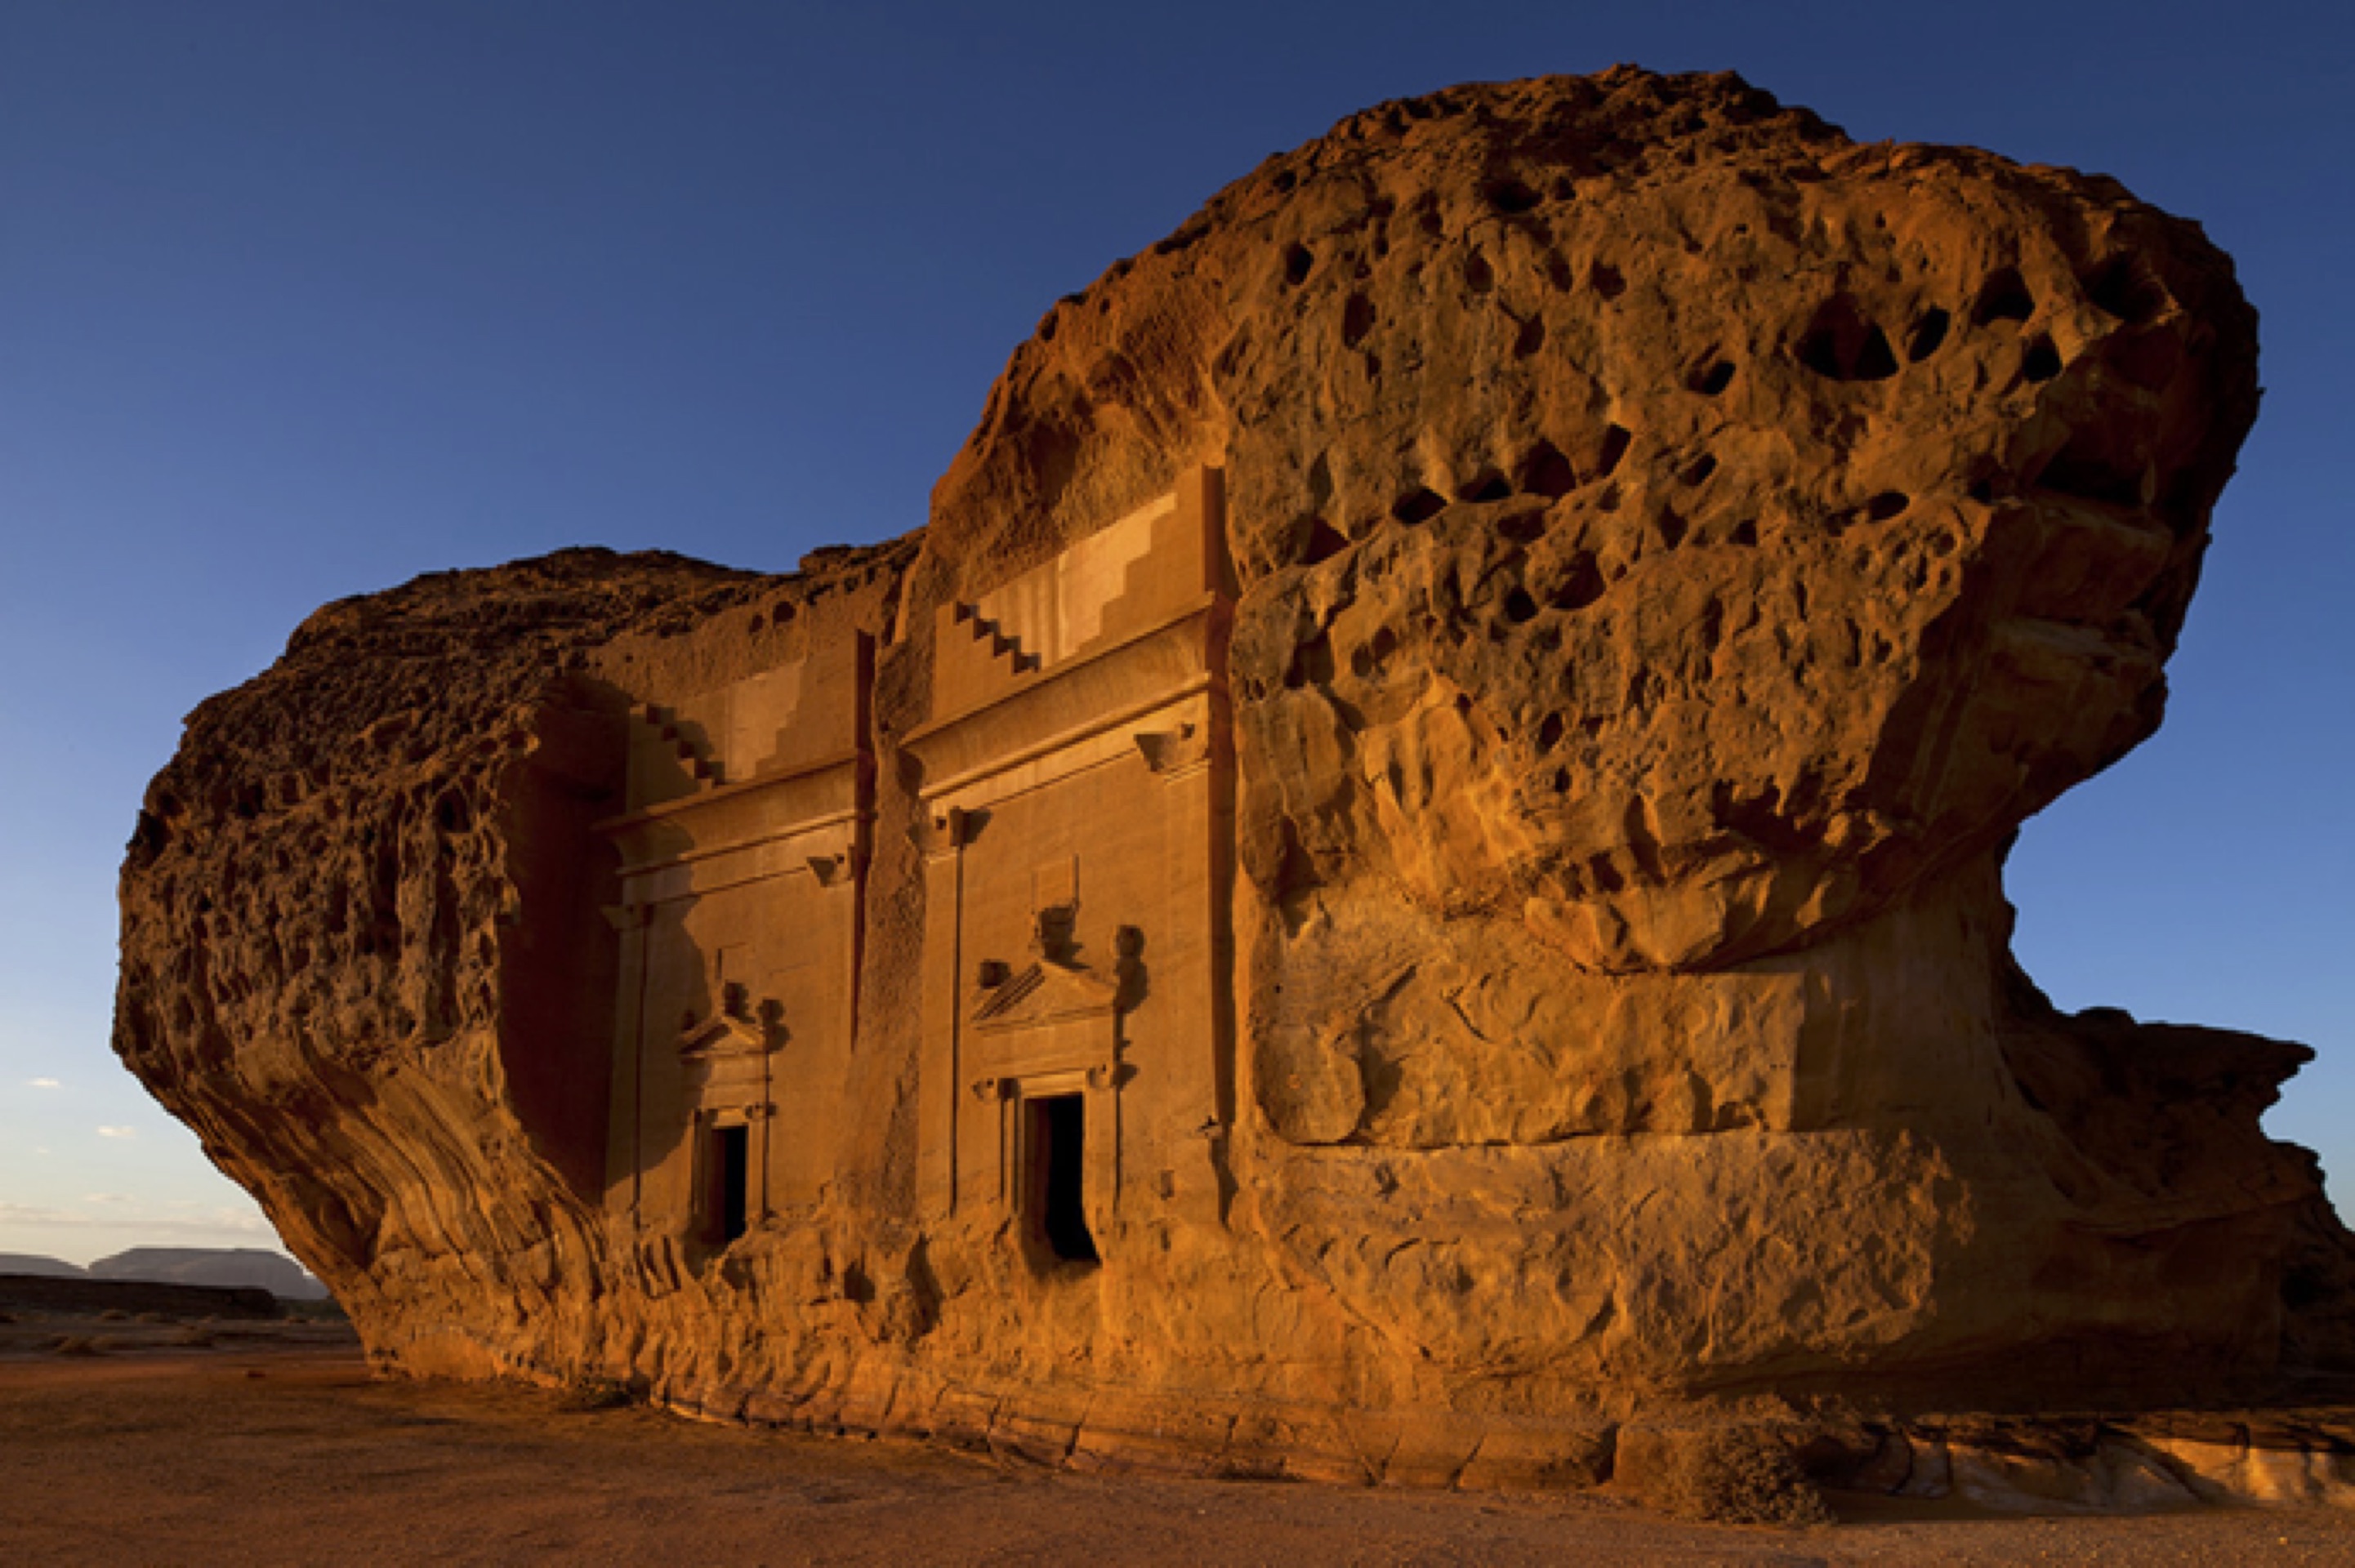 The pre-Islamic (Nabatean) site of Mada’in Salih, north-west Saudi Arabia